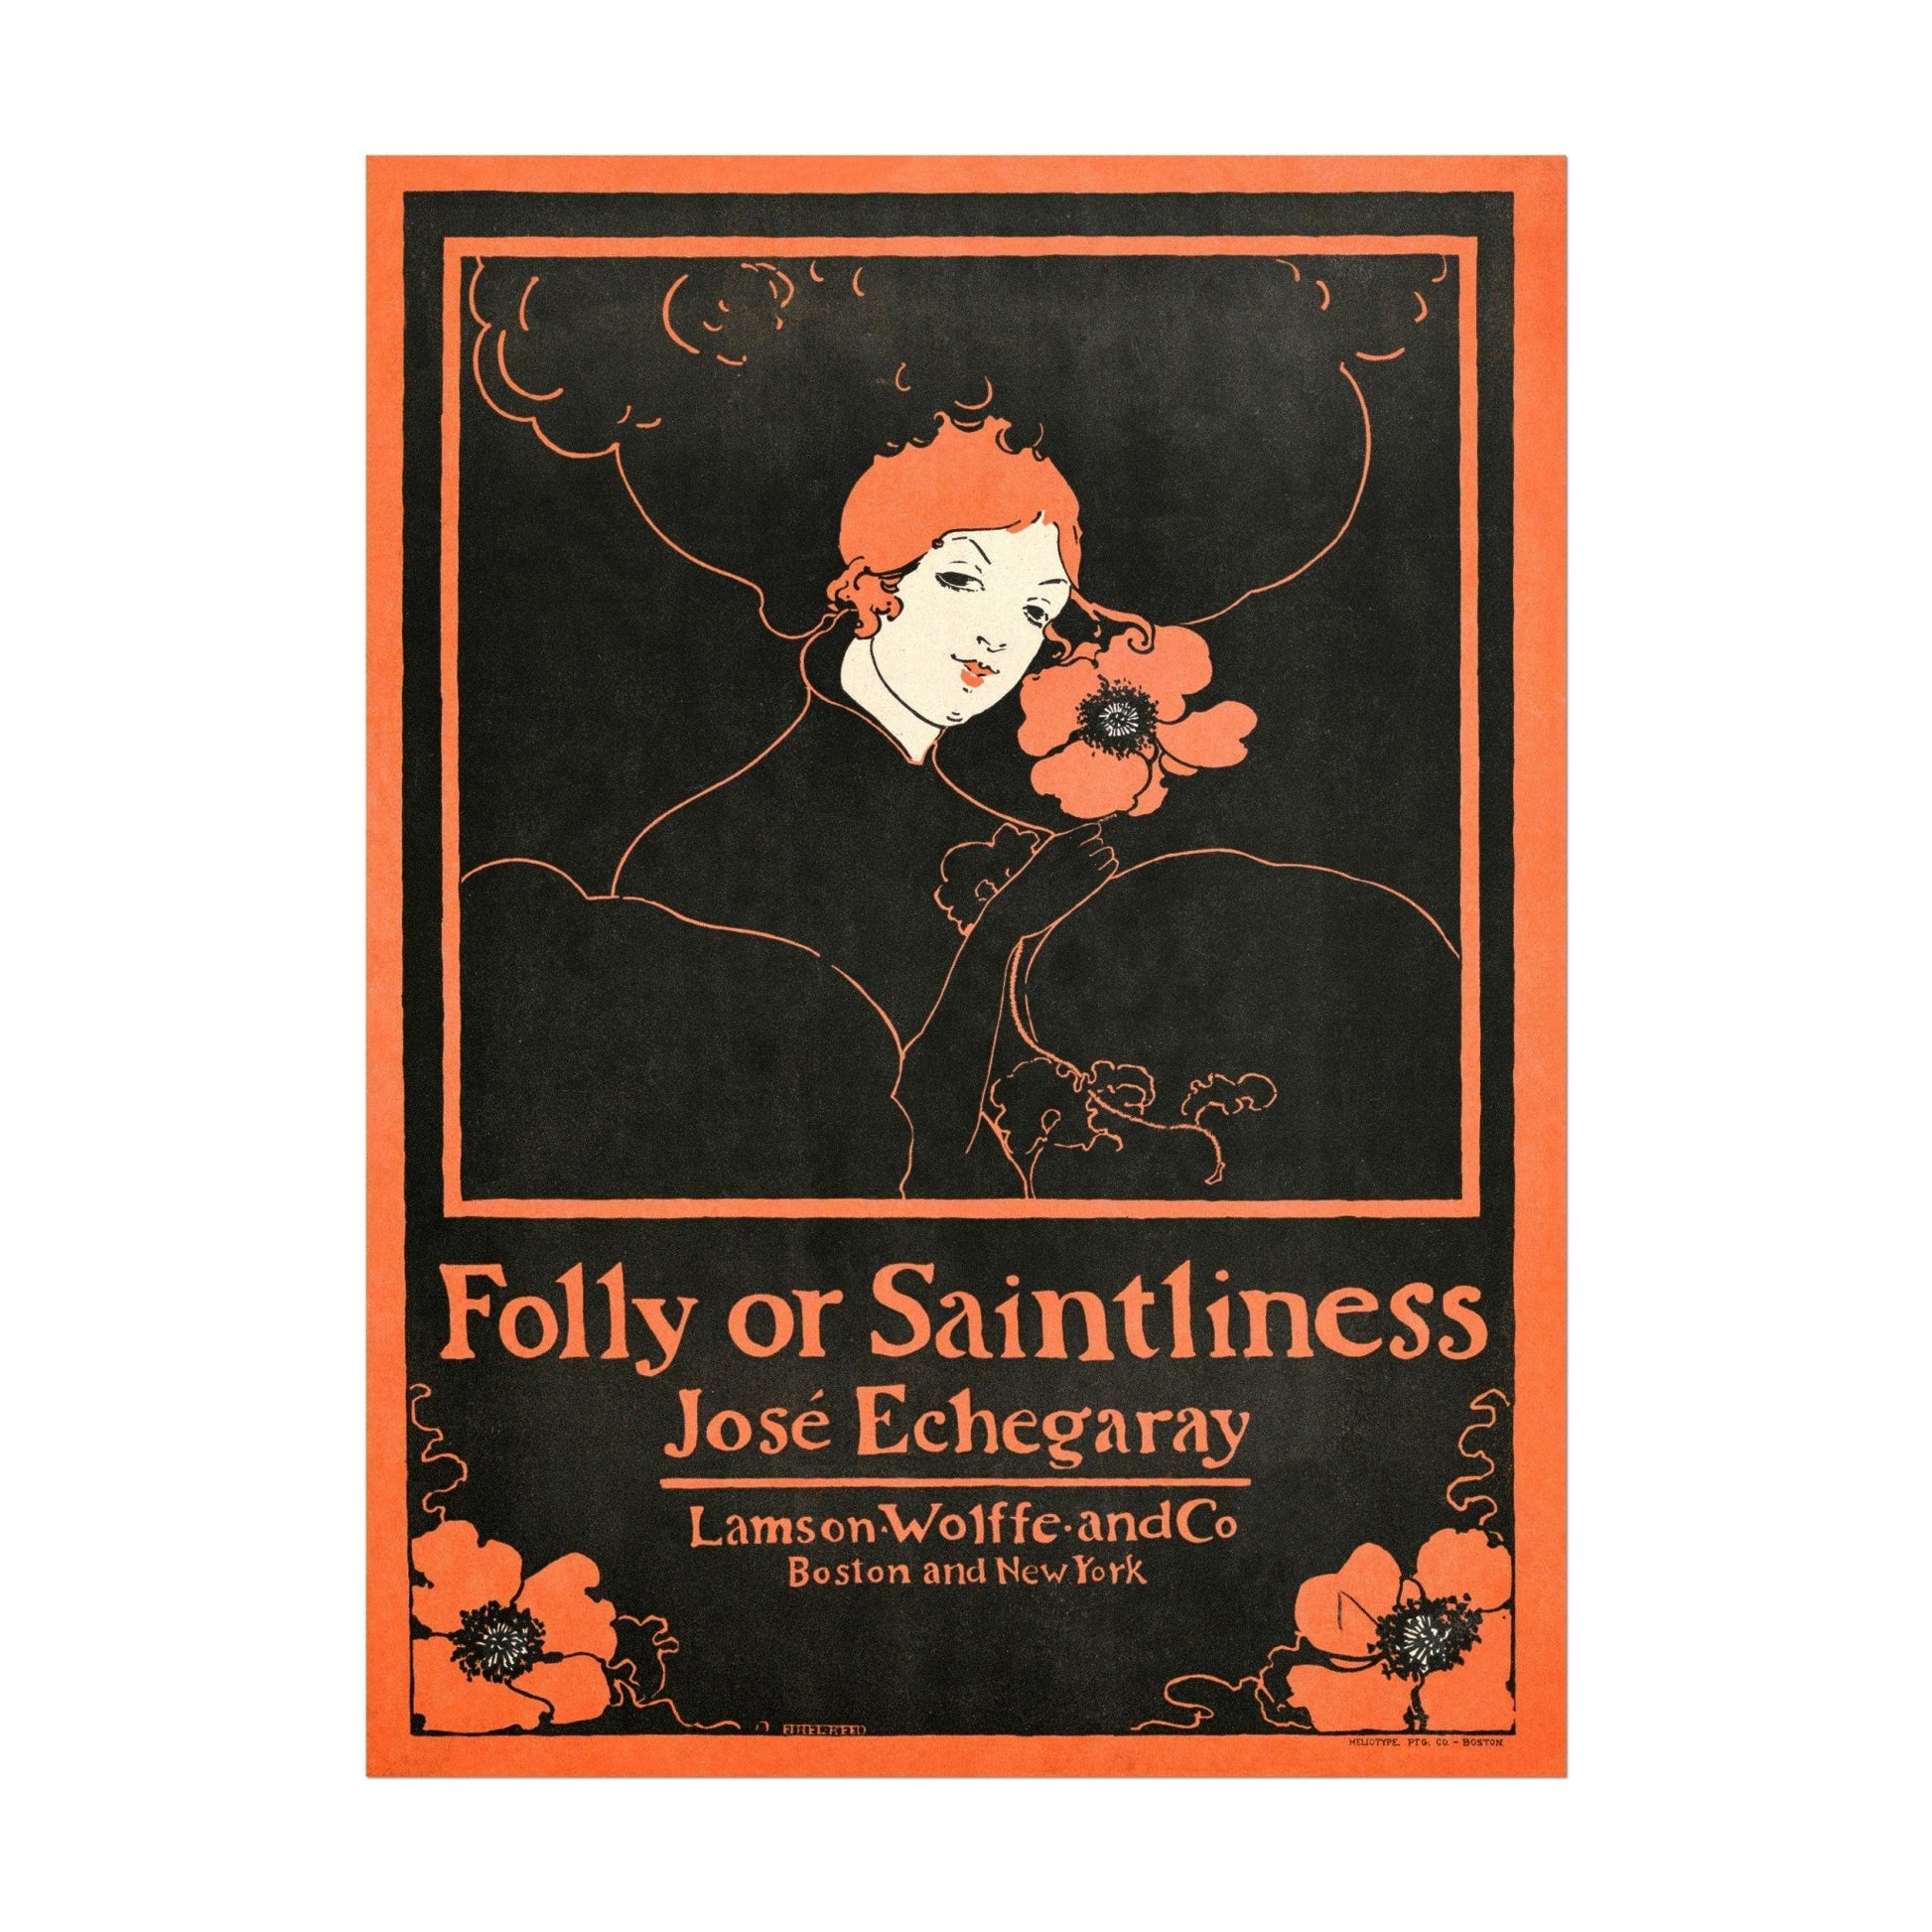 ETHEL REED - Folly Or Saintliness - Pathos Studio - Art Prints